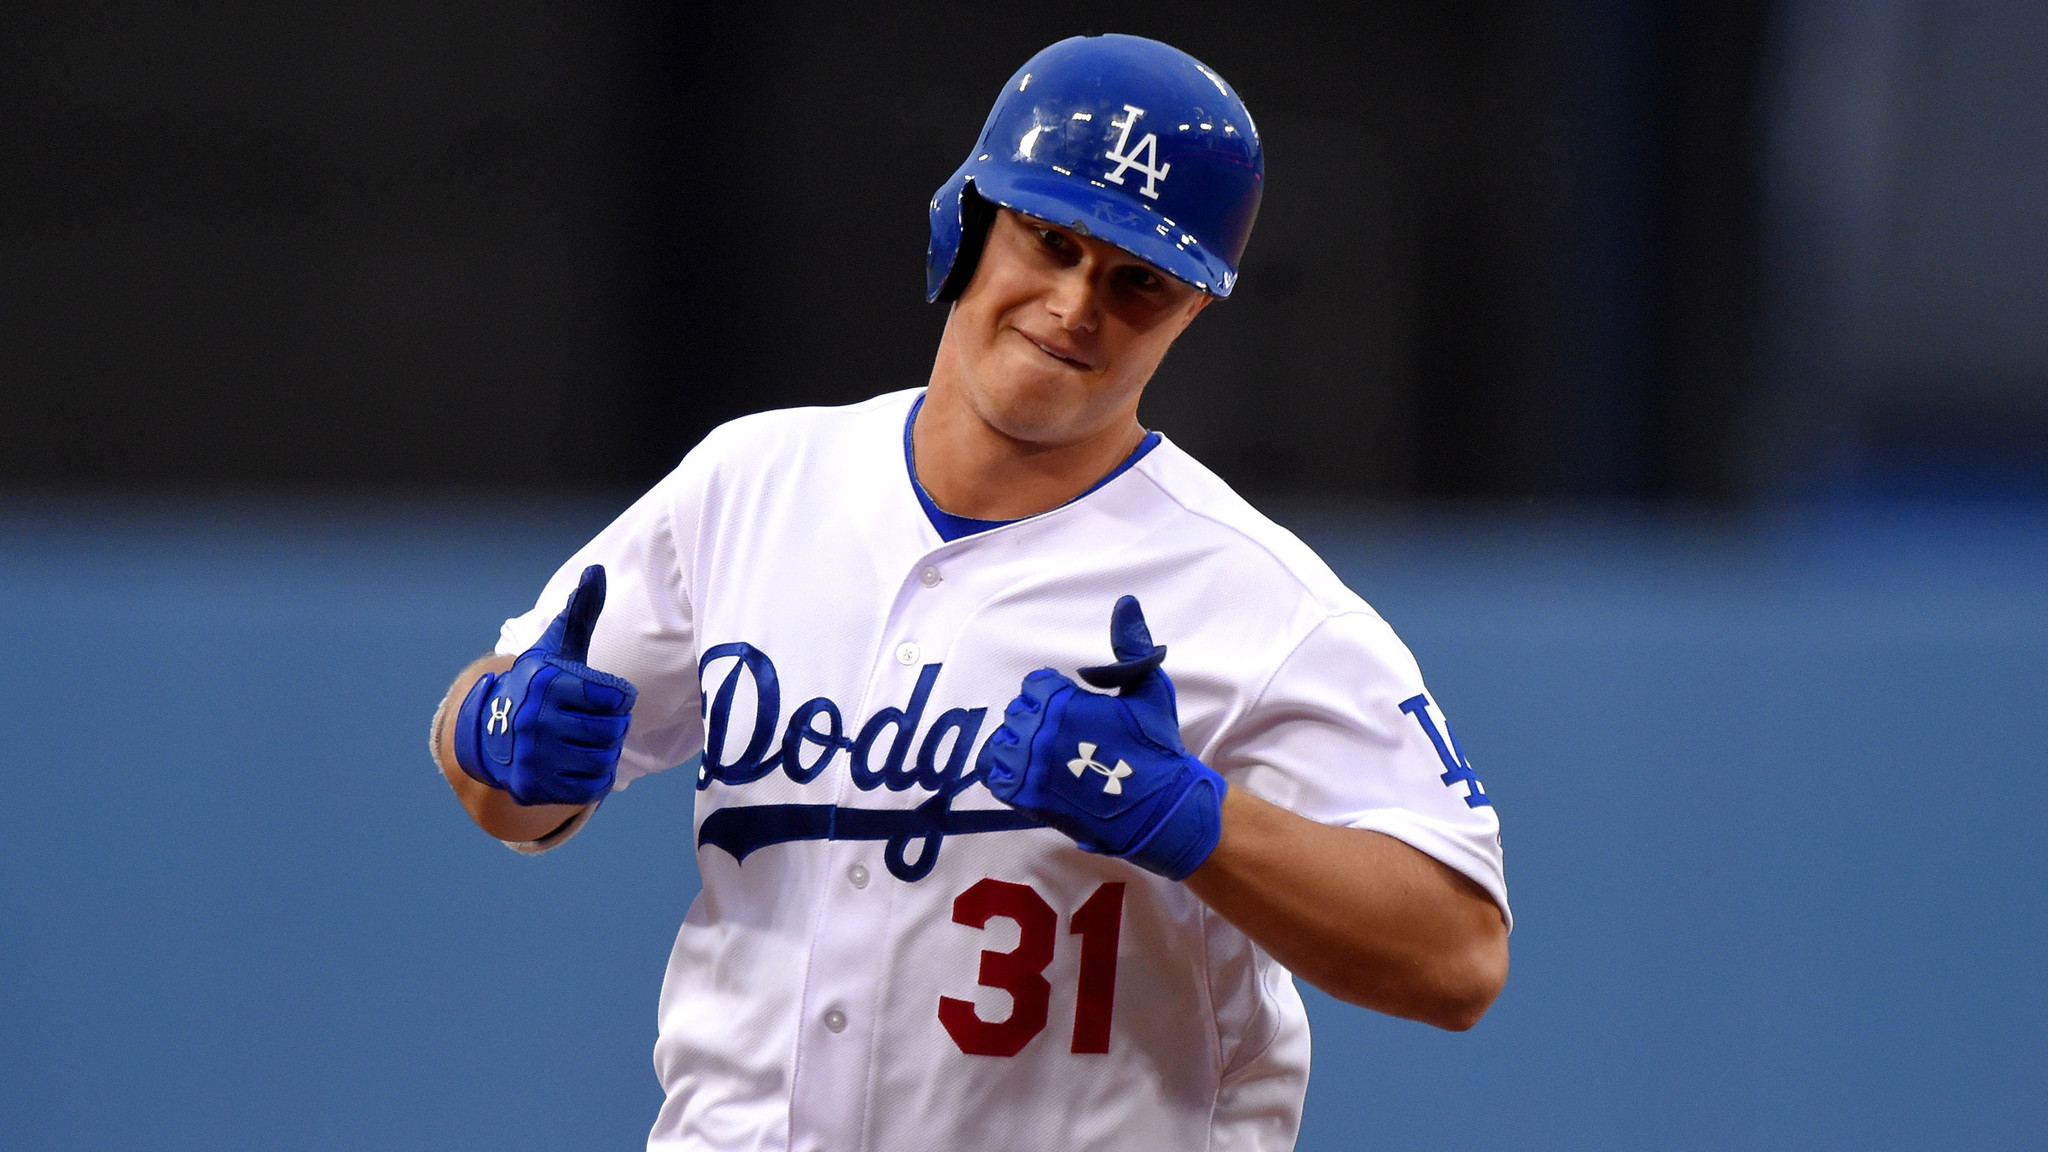 Dodgers rookie Joc Pederson to participate in Home Run Derby - LA Times